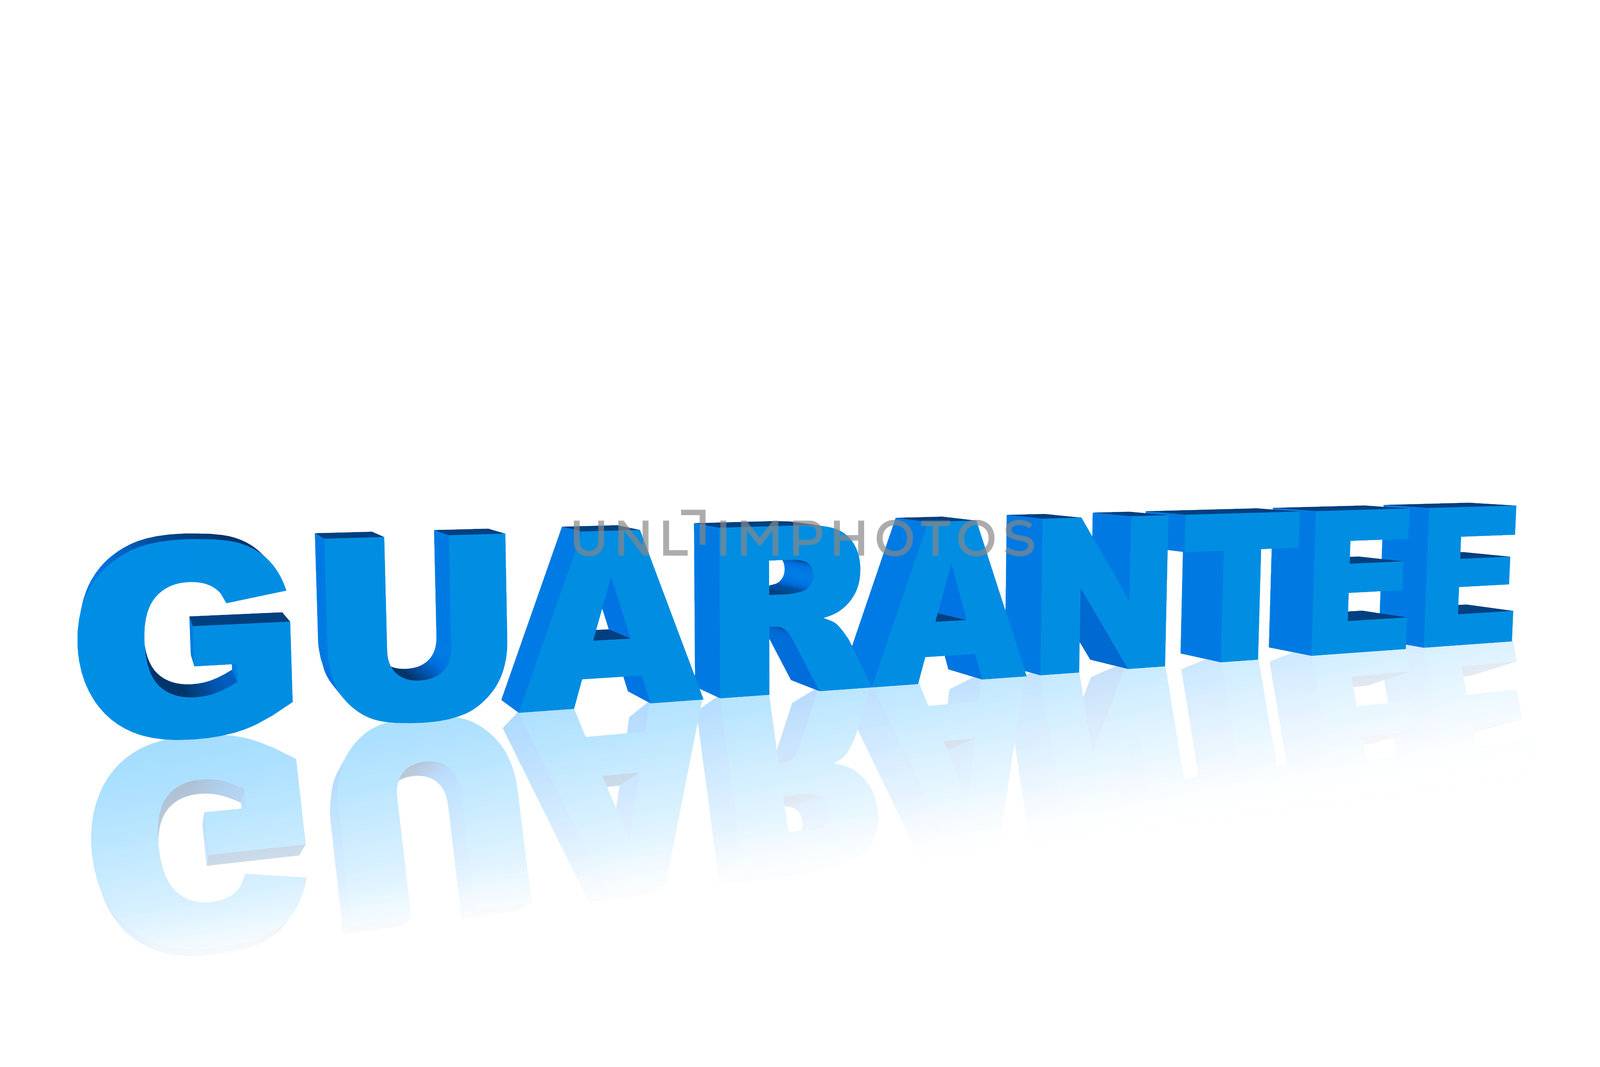 Guarantee Logo in 3d blue